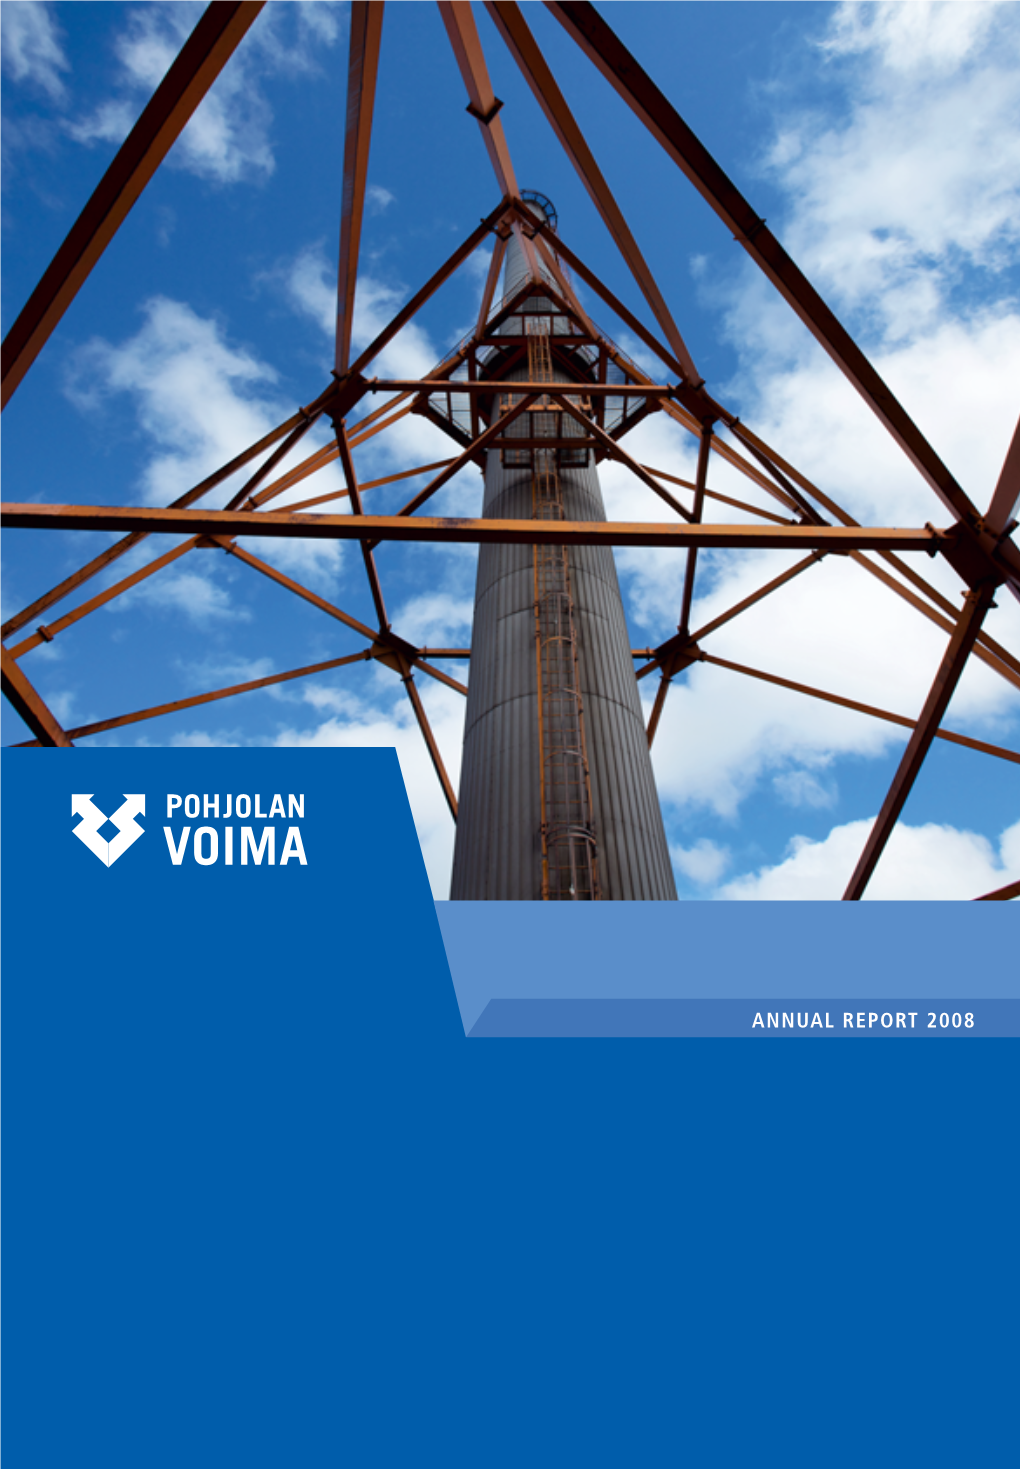 Pojolan Voima Annual Report 2008